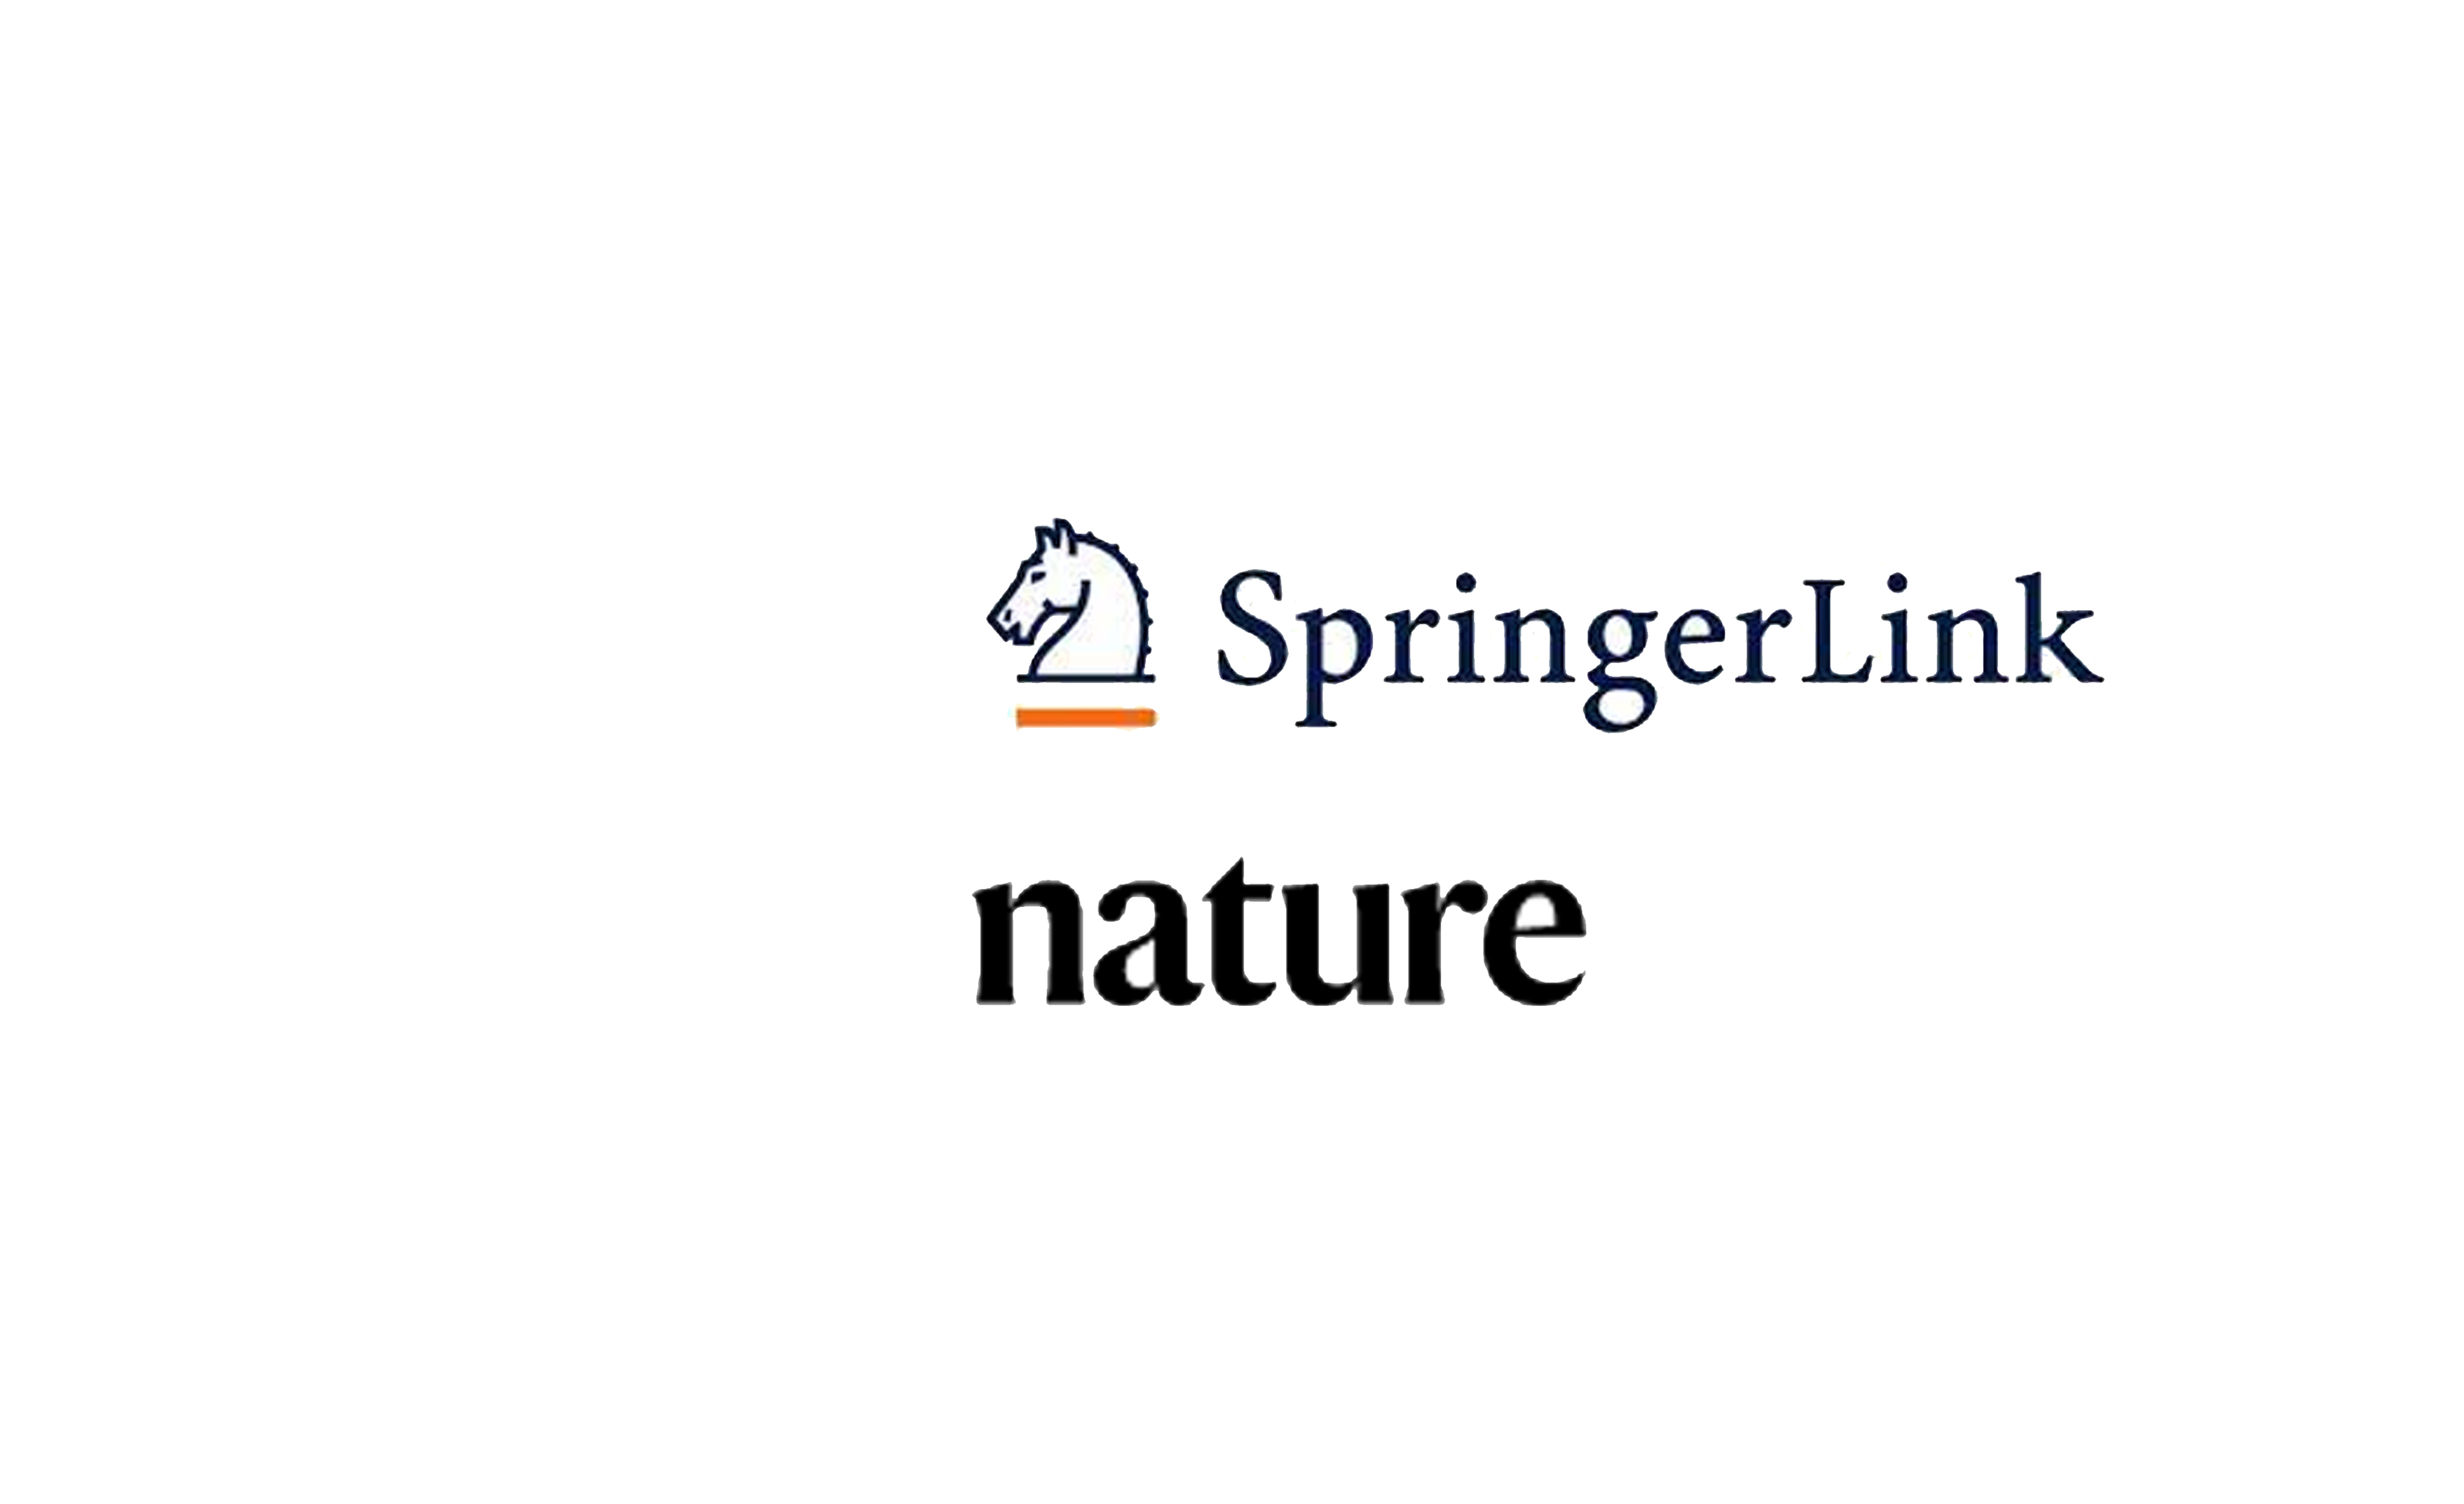 Extended the Trial Access for the Springer Link platform and Nature Platform